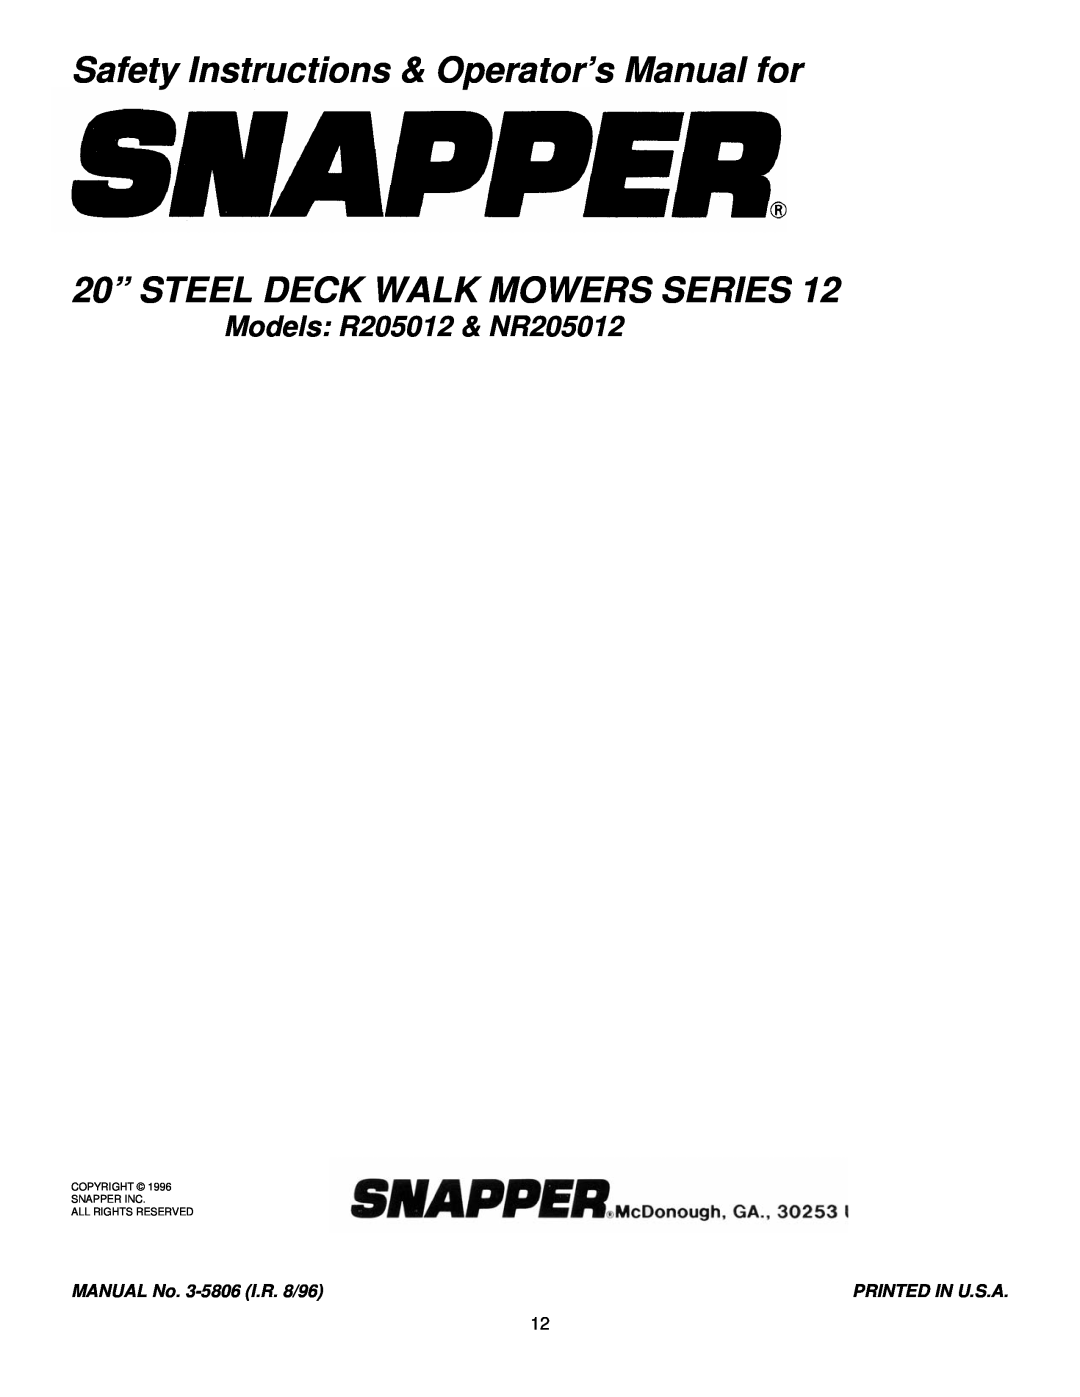 Snapper R205012, NR205012 20” STEEL DECK WALK MOWERS SERIES, Models R205012 & NR205012, MANUAL No. 3-5806 I.R. 8/96 